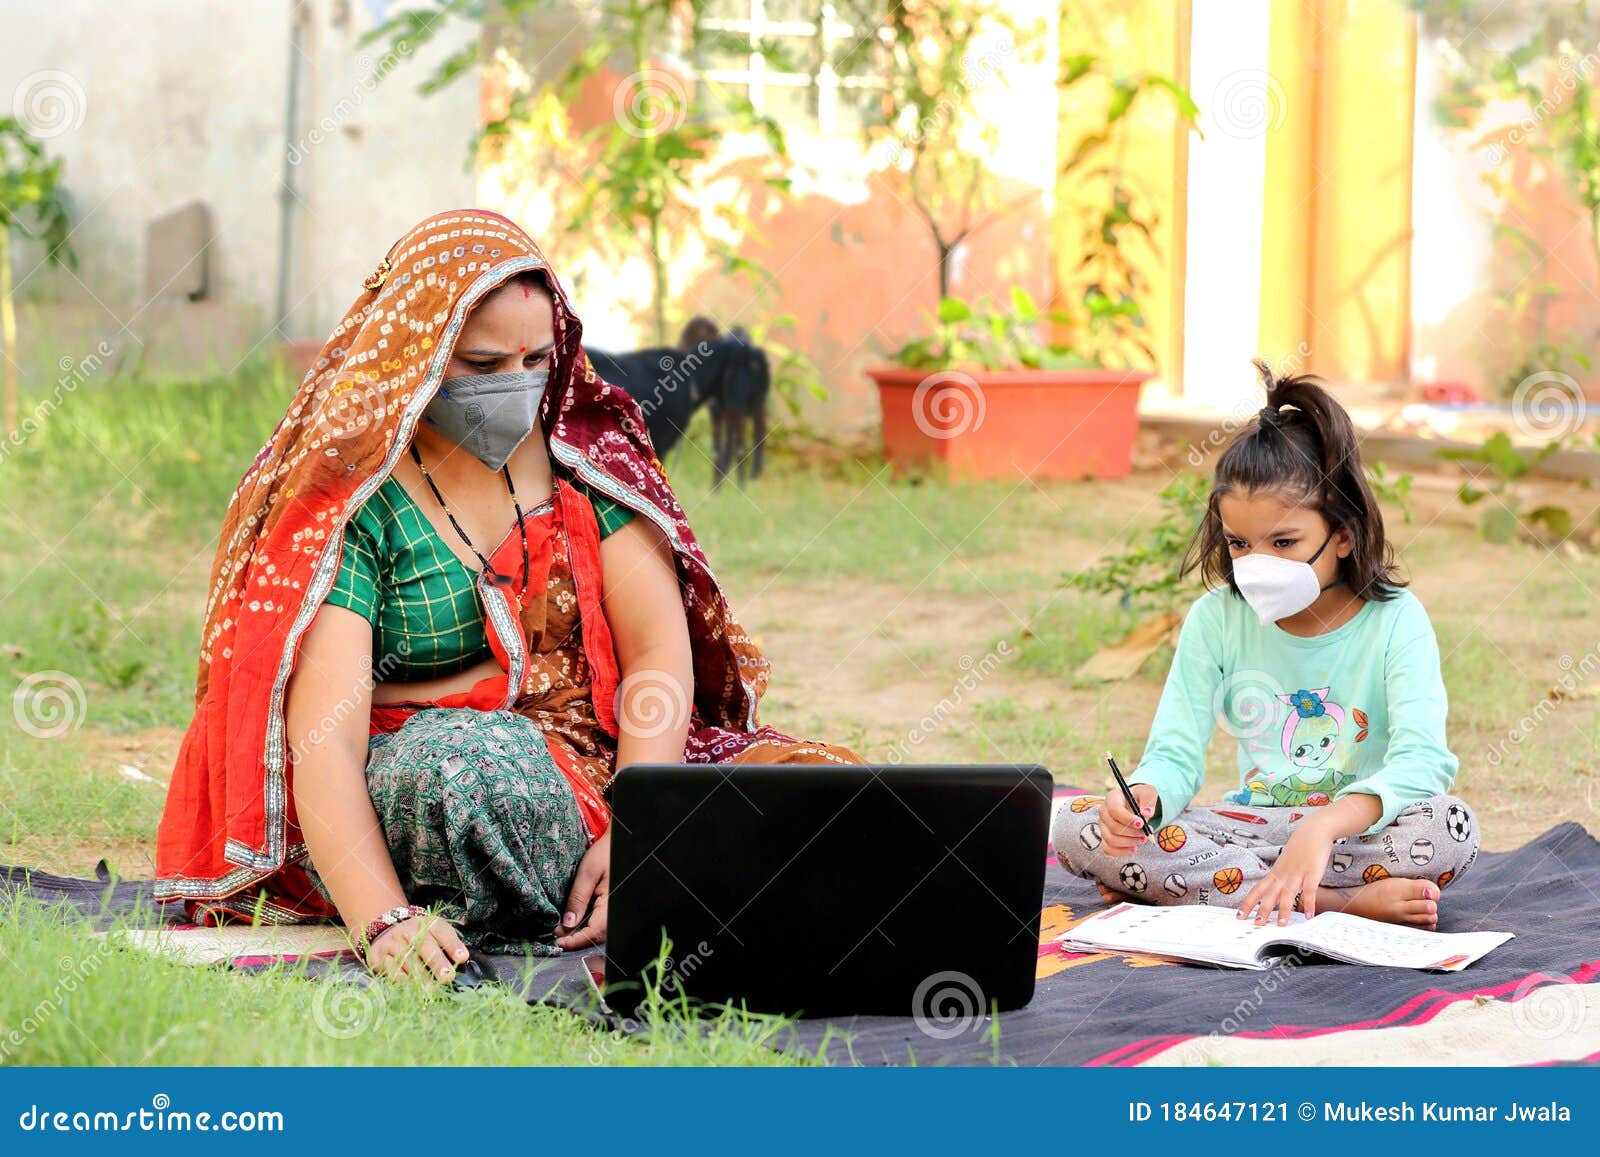 indian rural mother teaching daughter online on laptop using internet.